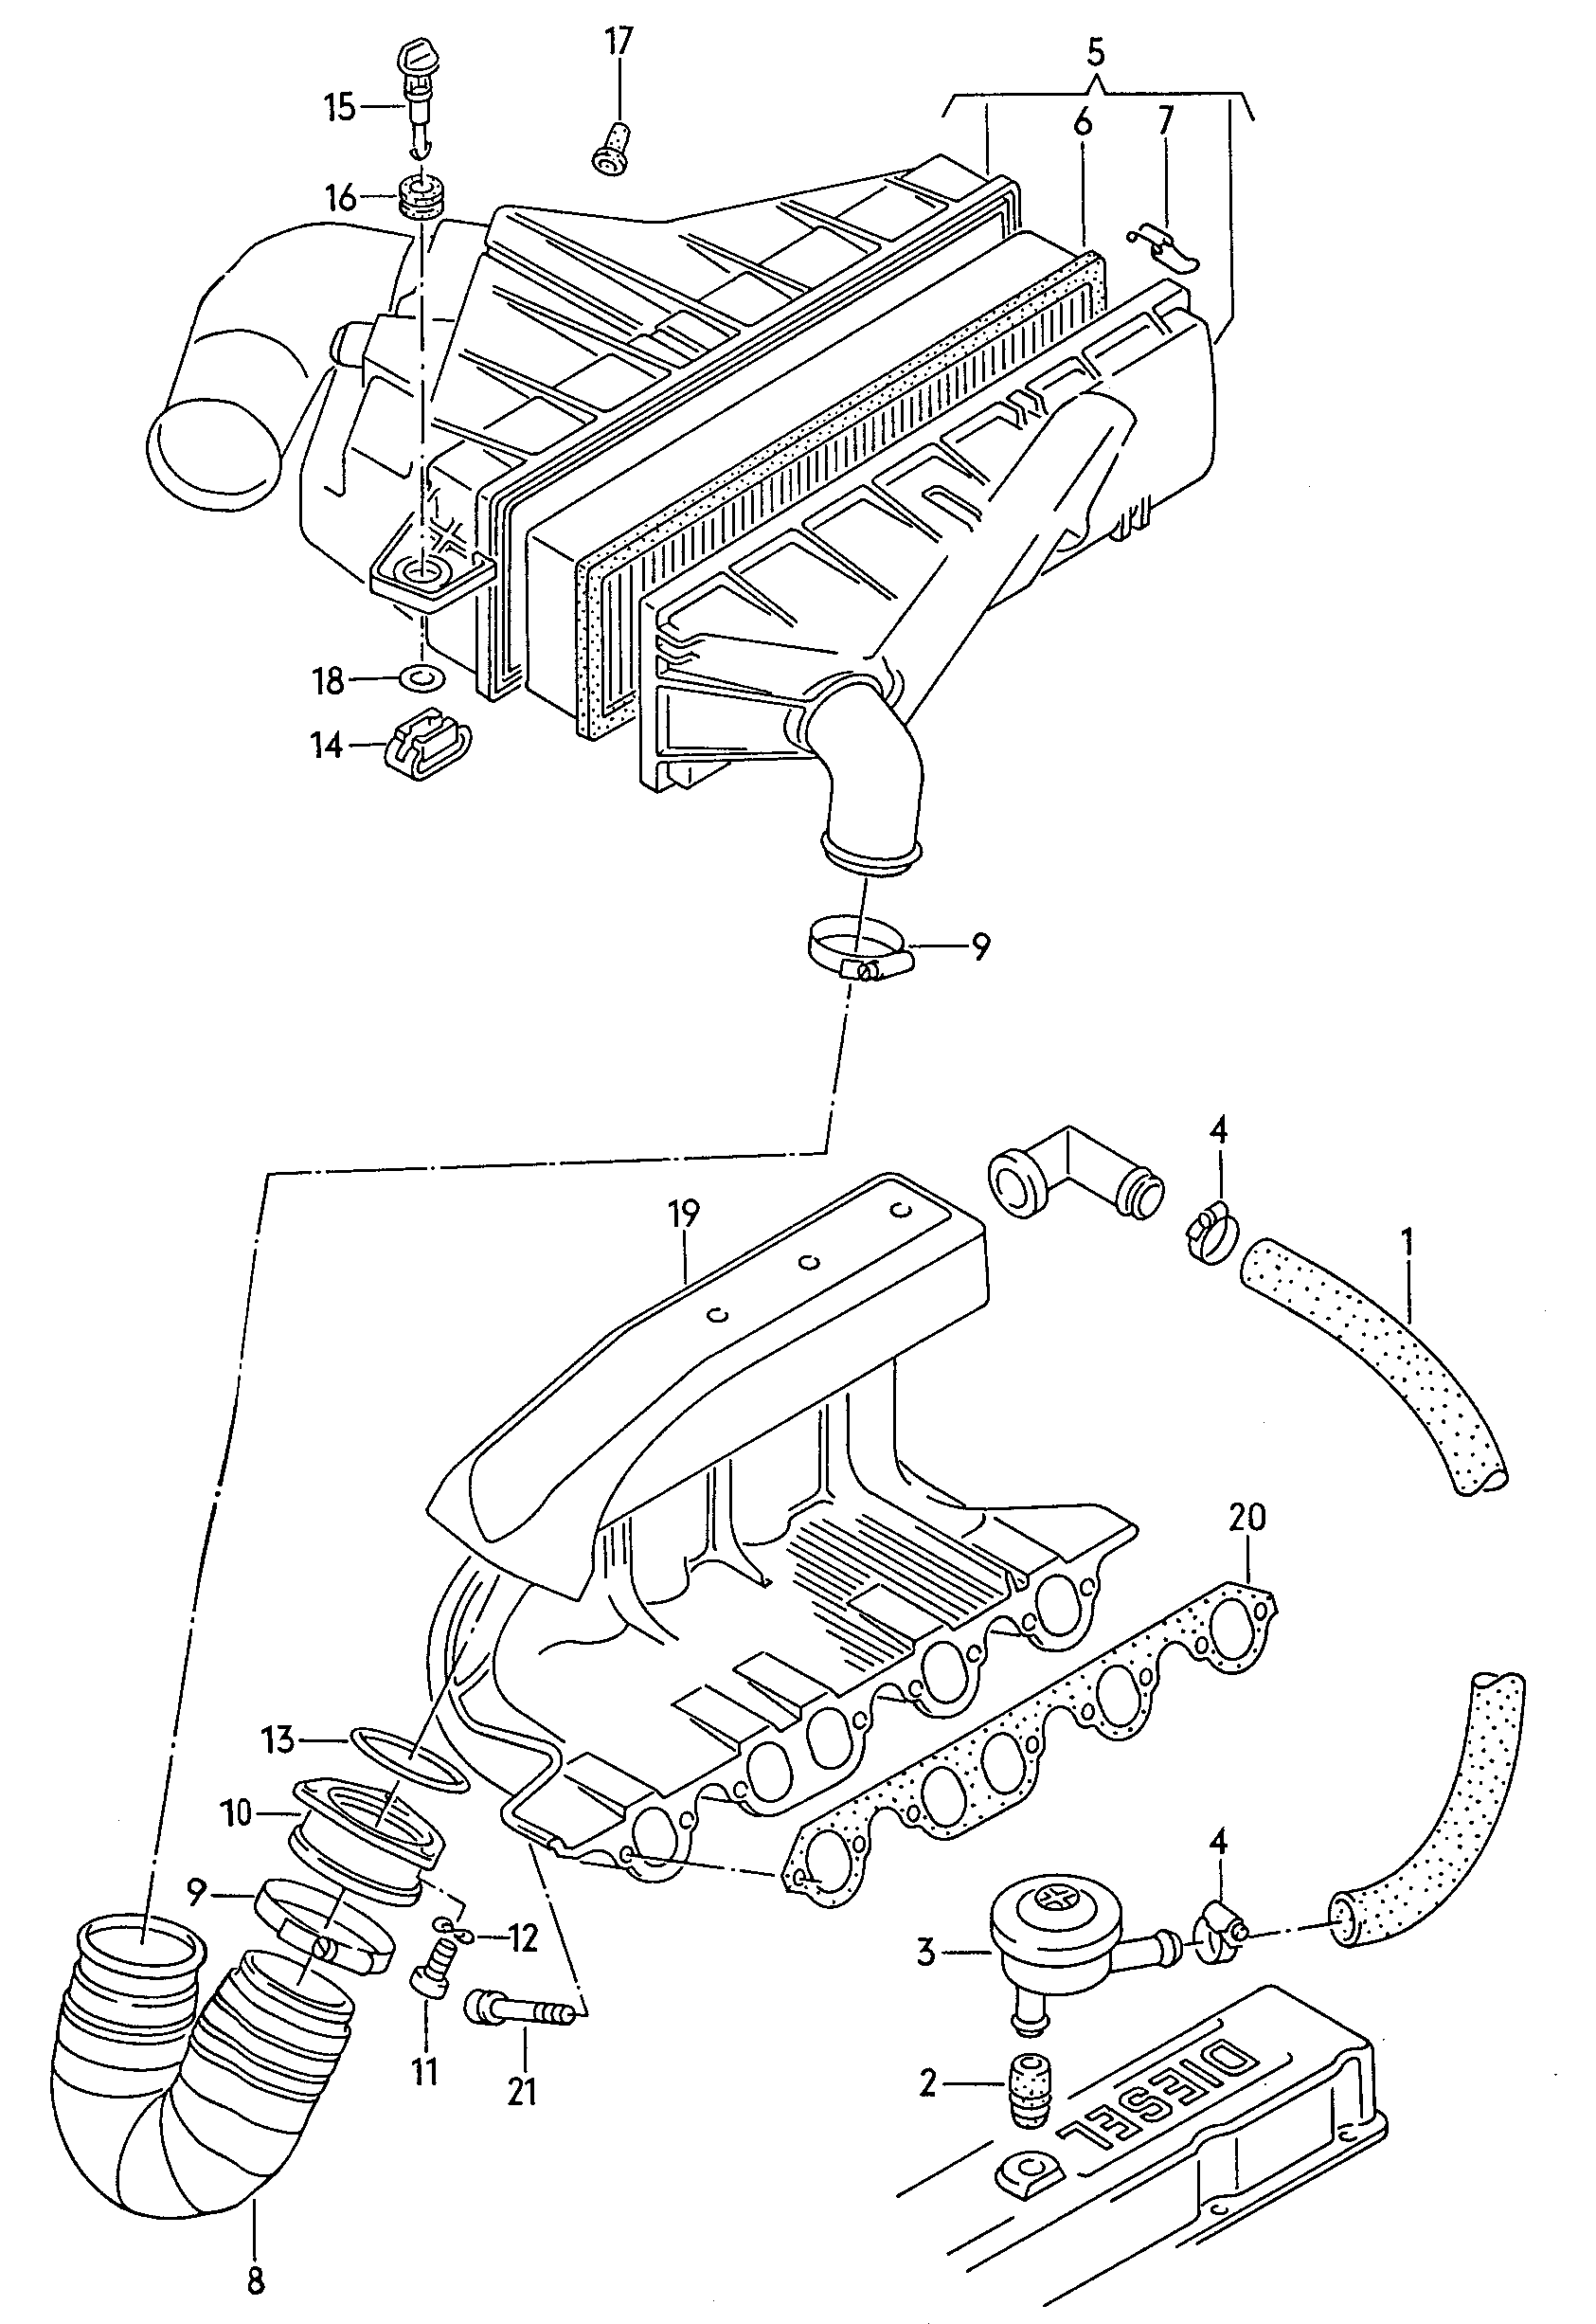 Air filterPressure regulating valveIntake connection 2.4ltr. - Audi 100/Avant - a100